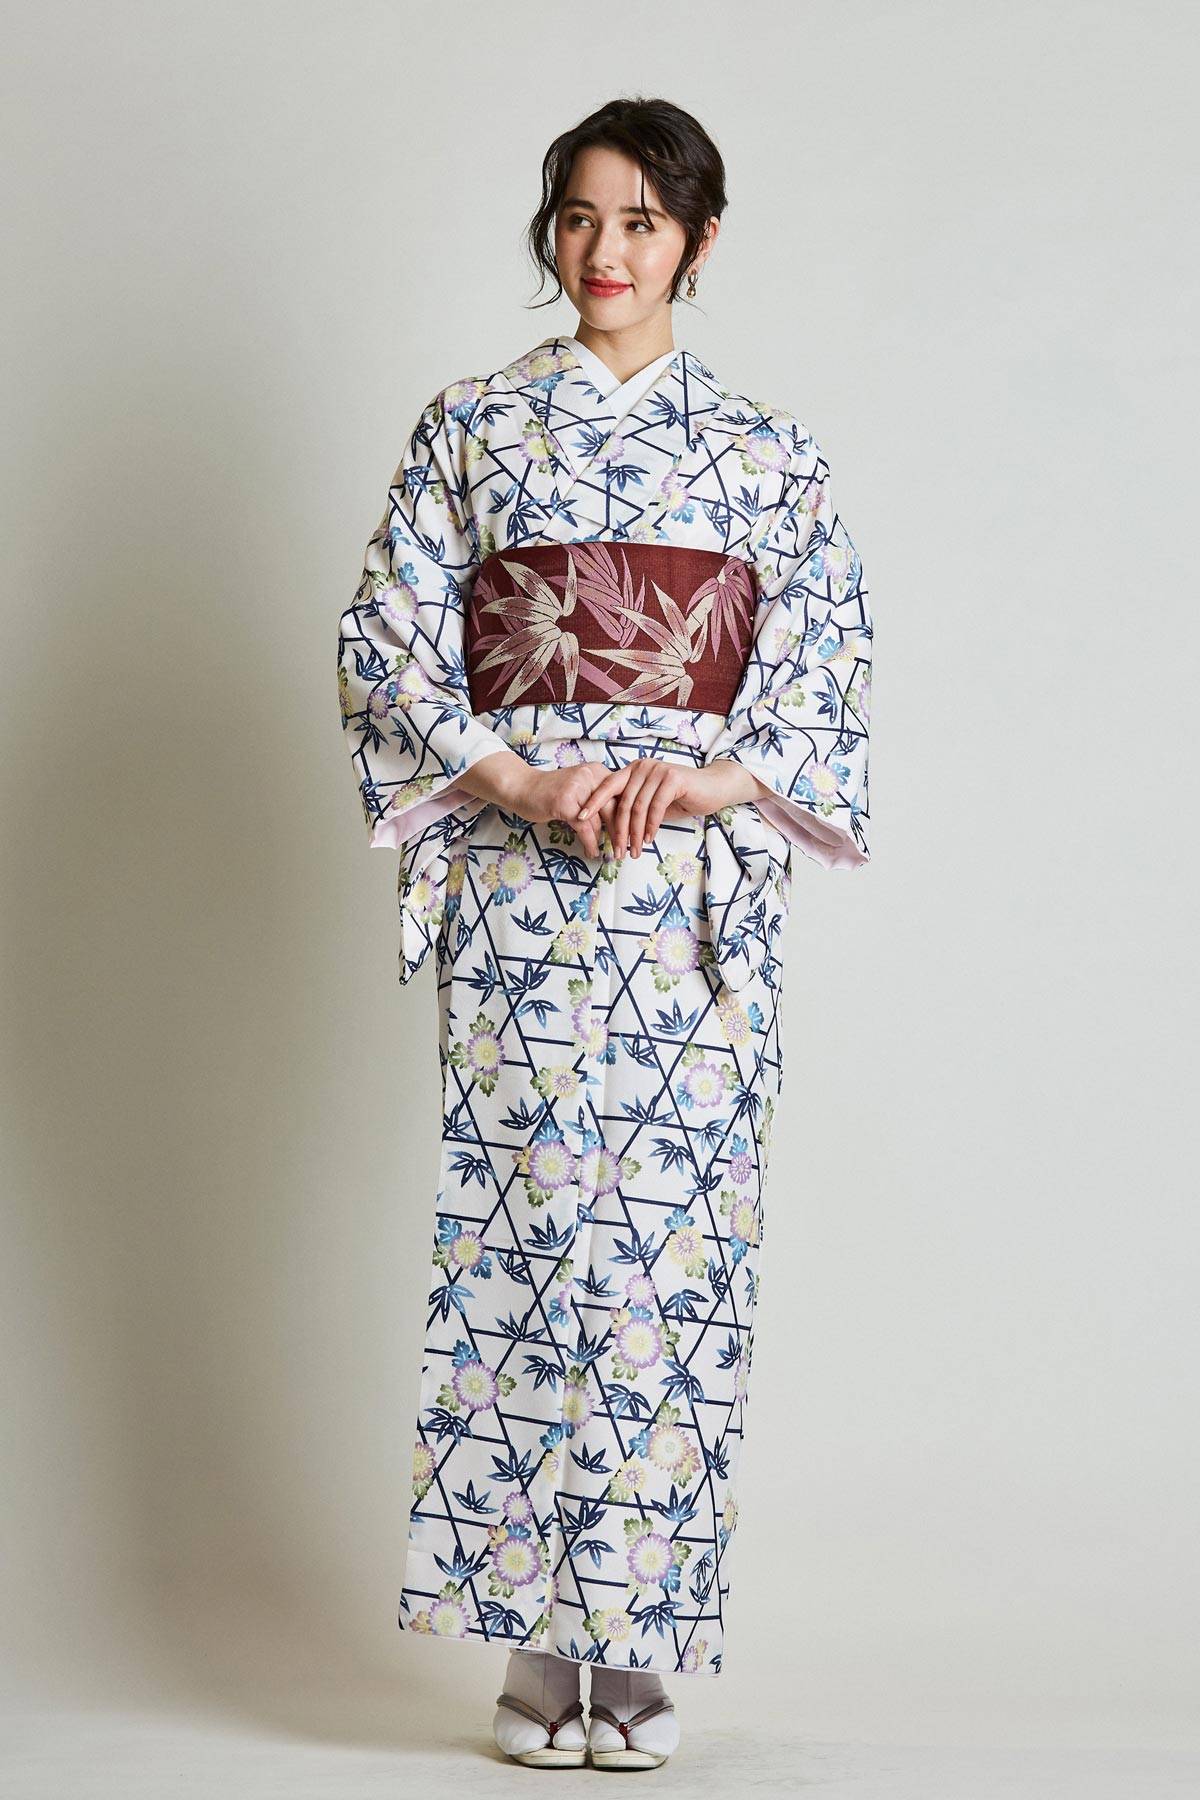 Japanese Women's Traditional TABI Socks Kimono Lace type White from JAPAN 